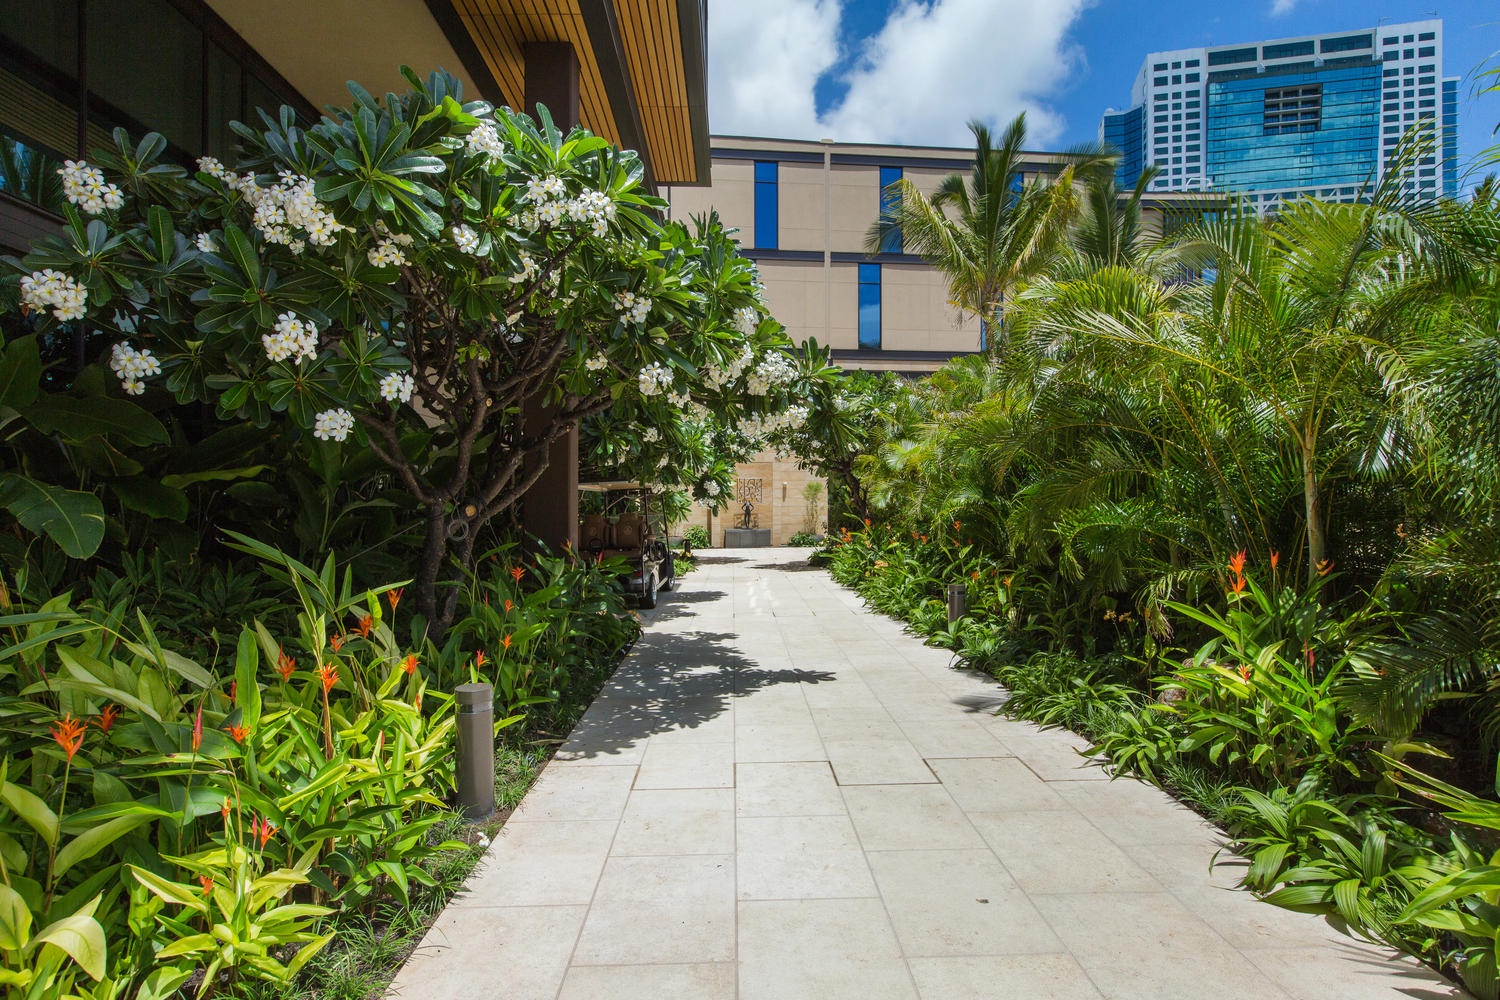 Honolulu Vacation Rentals, Park Lane Palm Resort - The "Park Lane" pathway